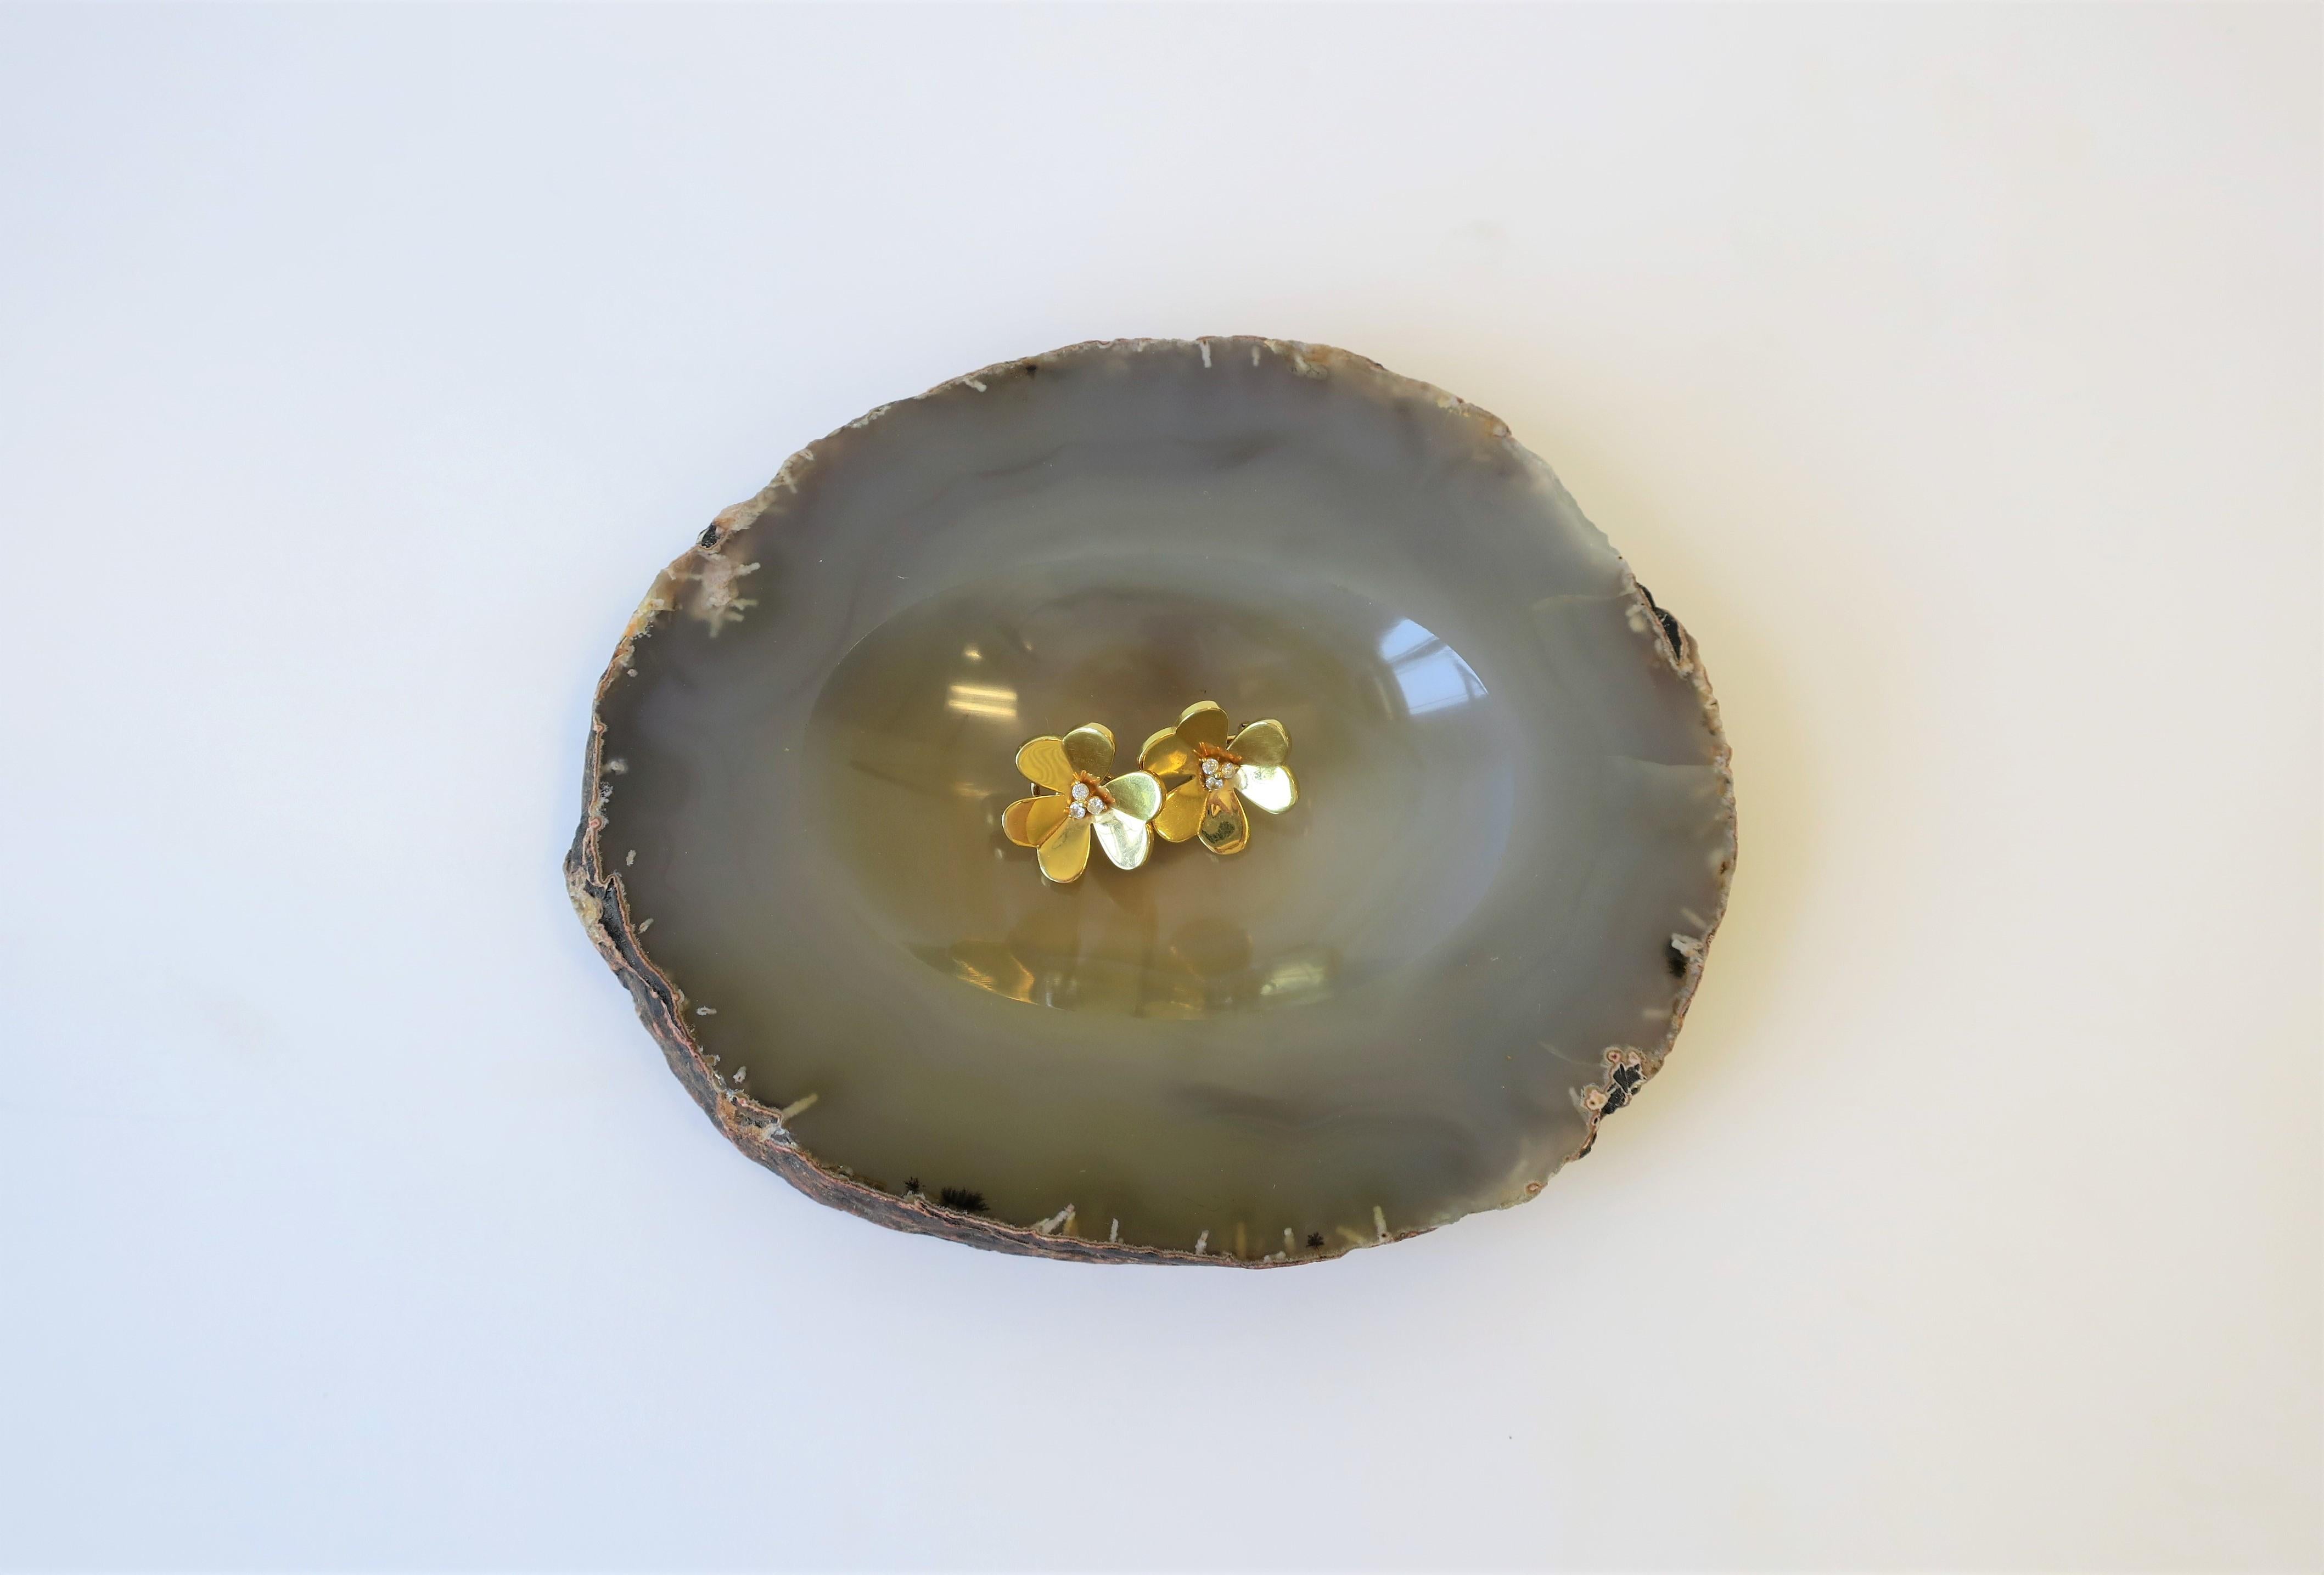 Organic Modern Grey Agate Vessel Bowl or Decorative Object